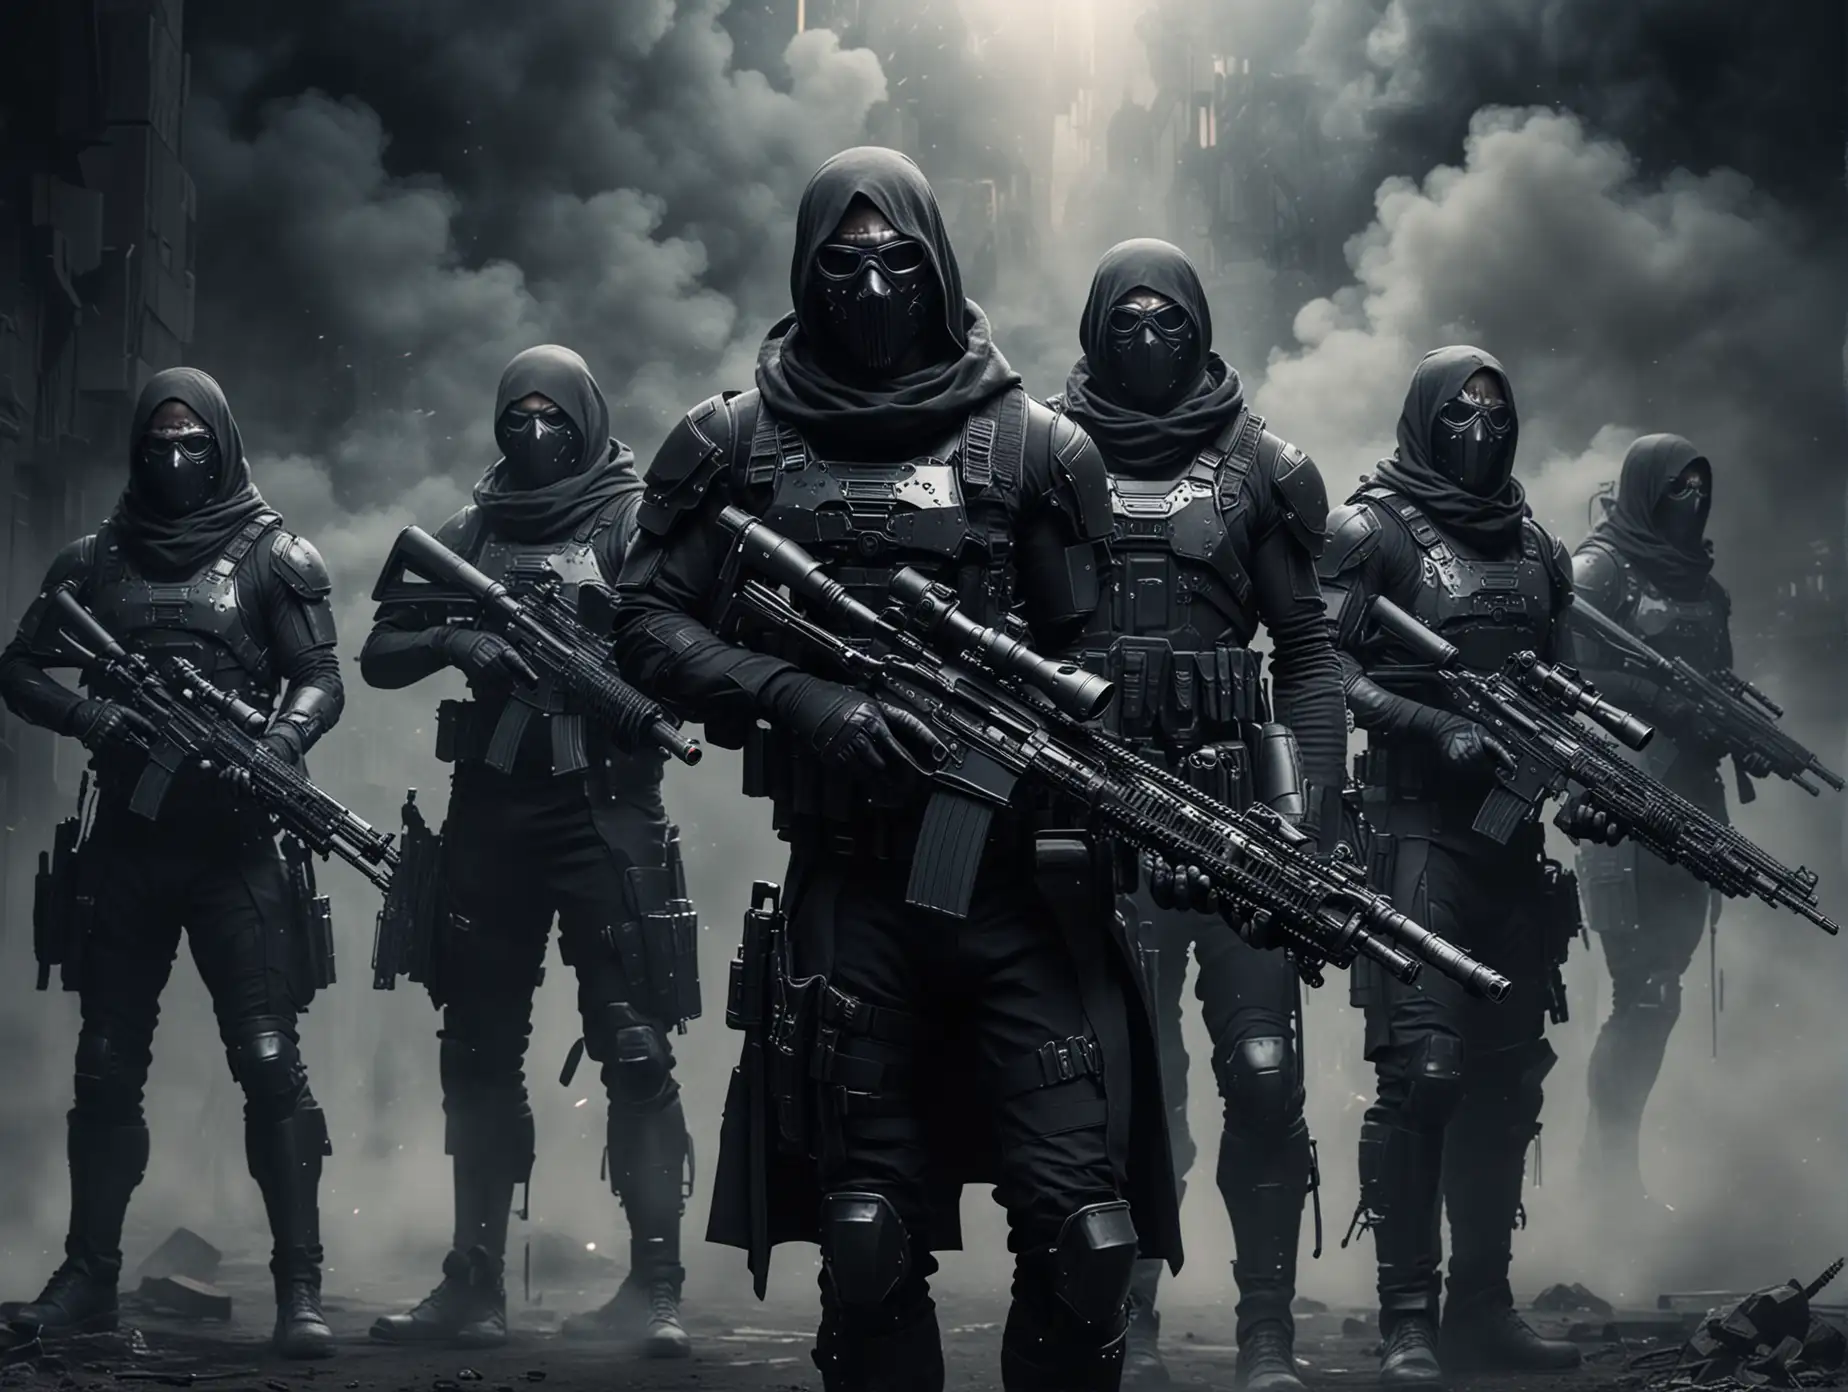 Futuristic-Masked-Sniper-Army-in-Black-SciFi-Environment